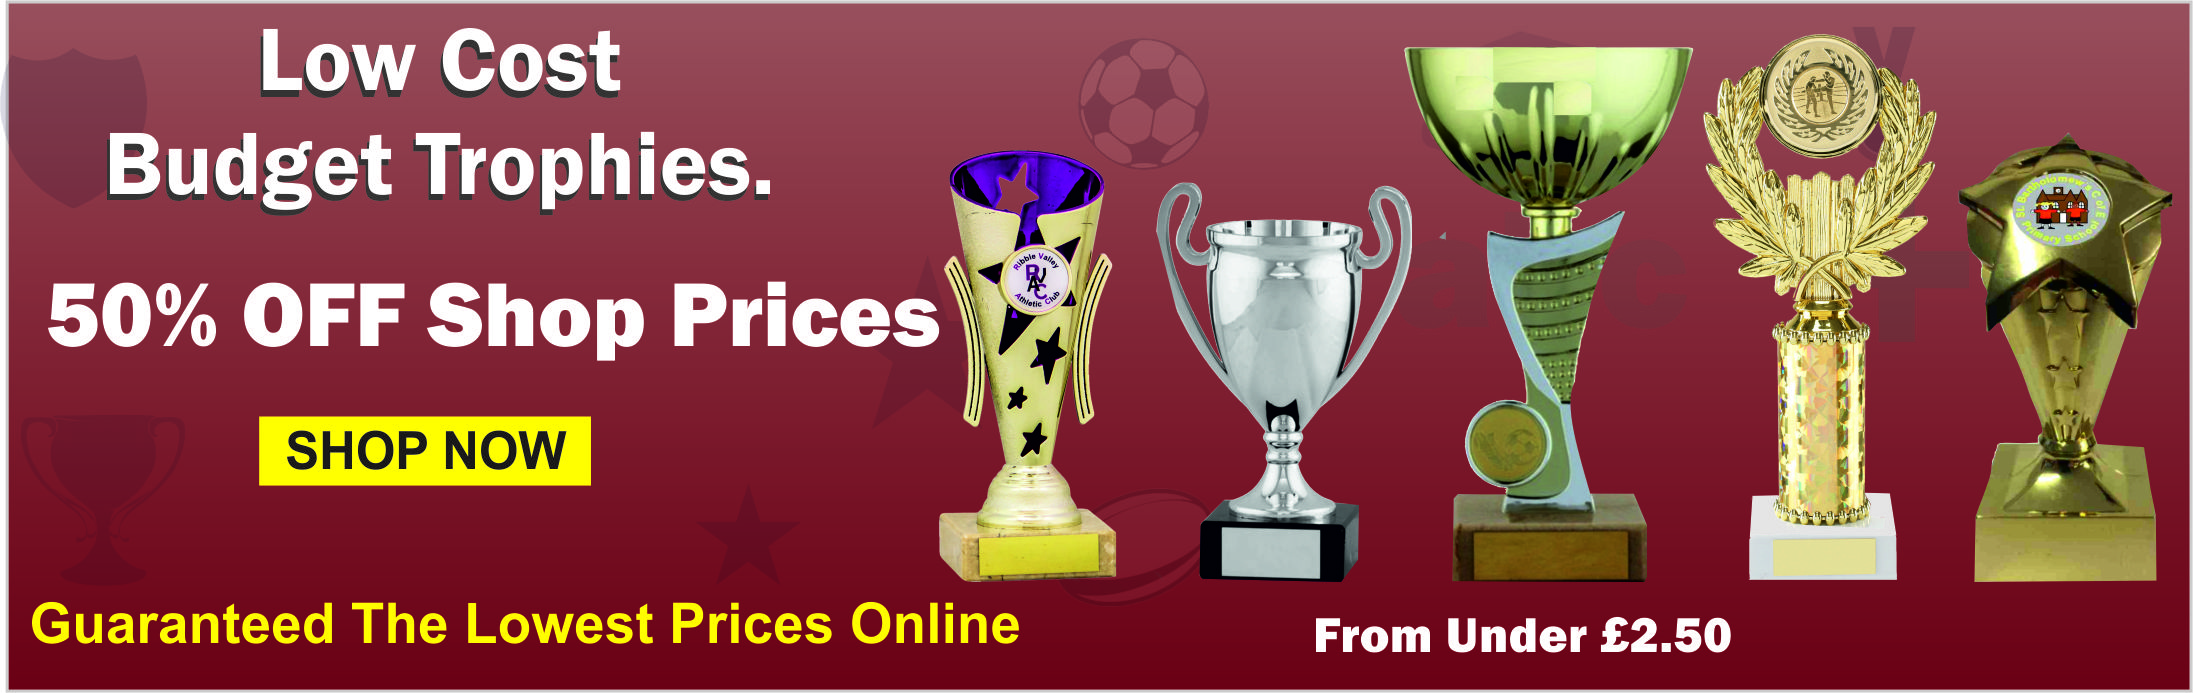 *Budget Guide Star Football Trophy Award Cheap School Bargain FREE ENGRAVING 